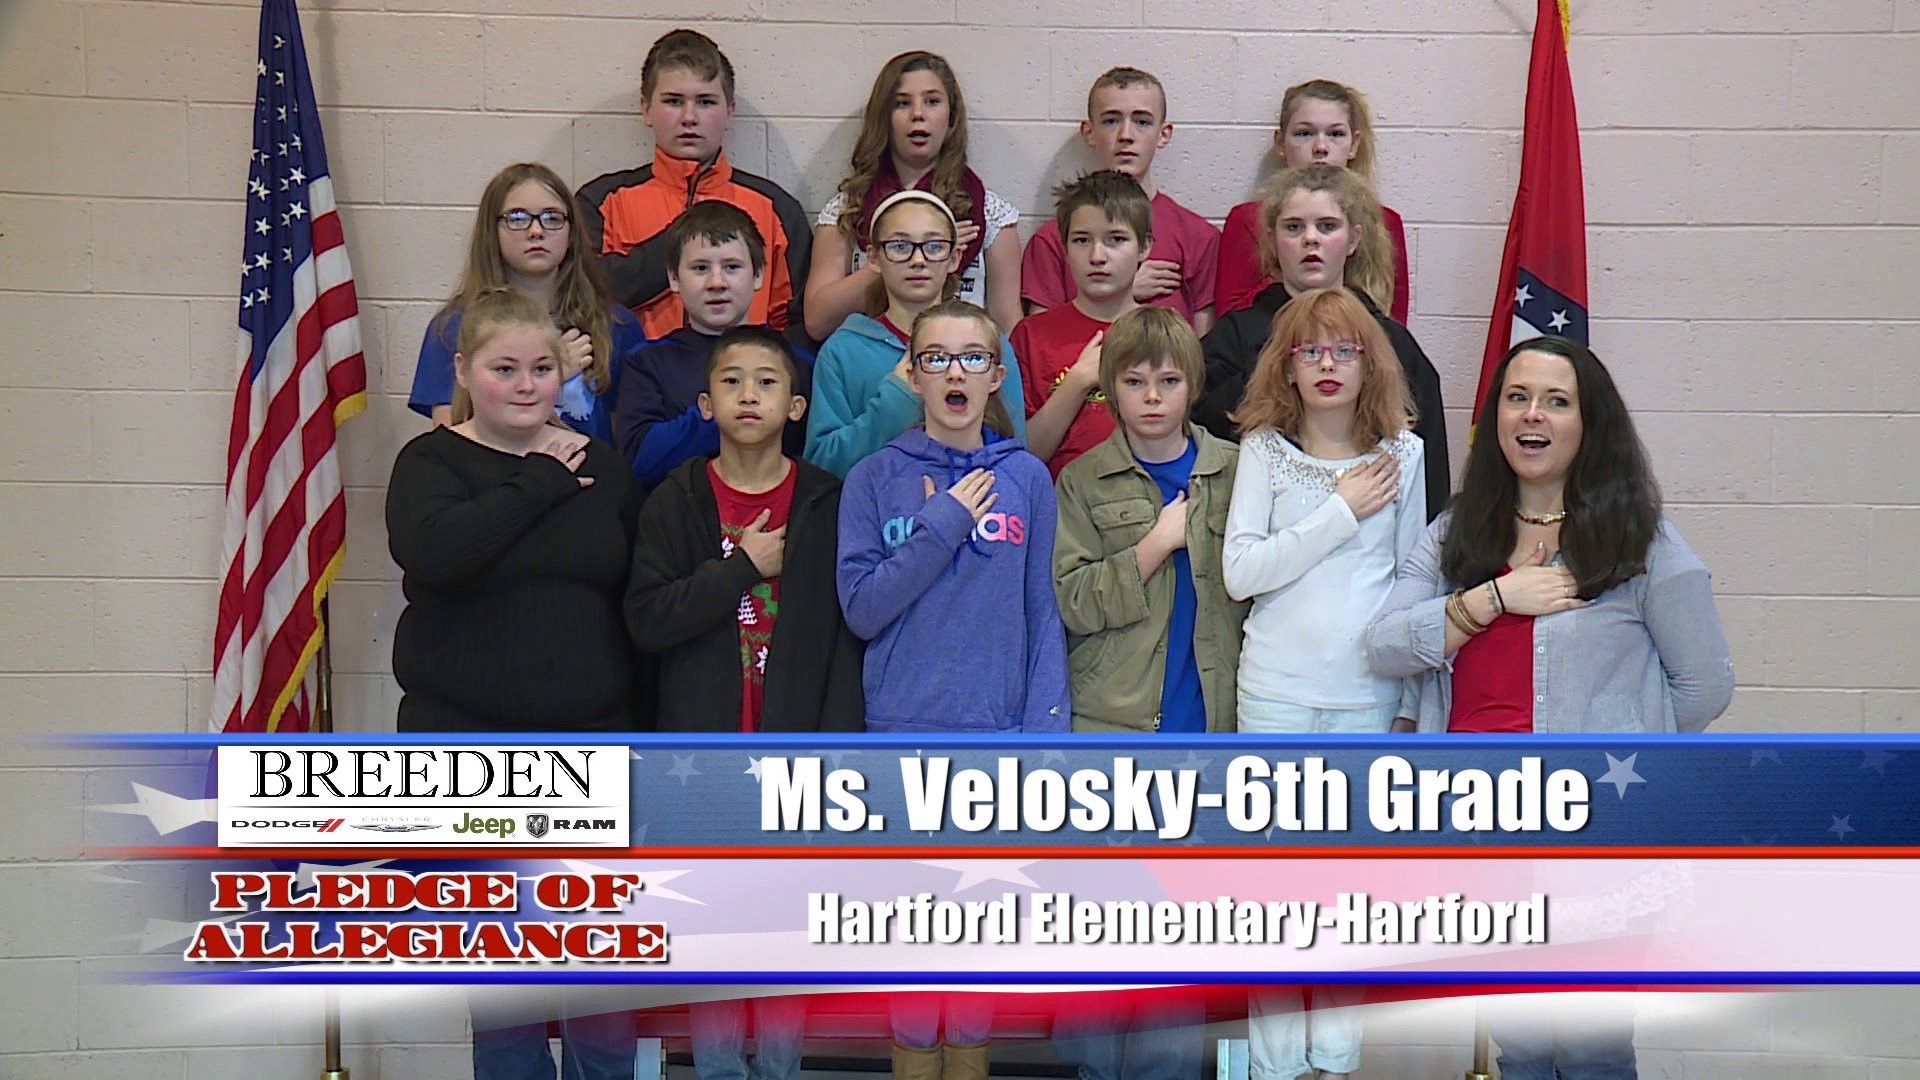 Hartford Elementary, Hartford - Ms. Velosky - 6th Grade